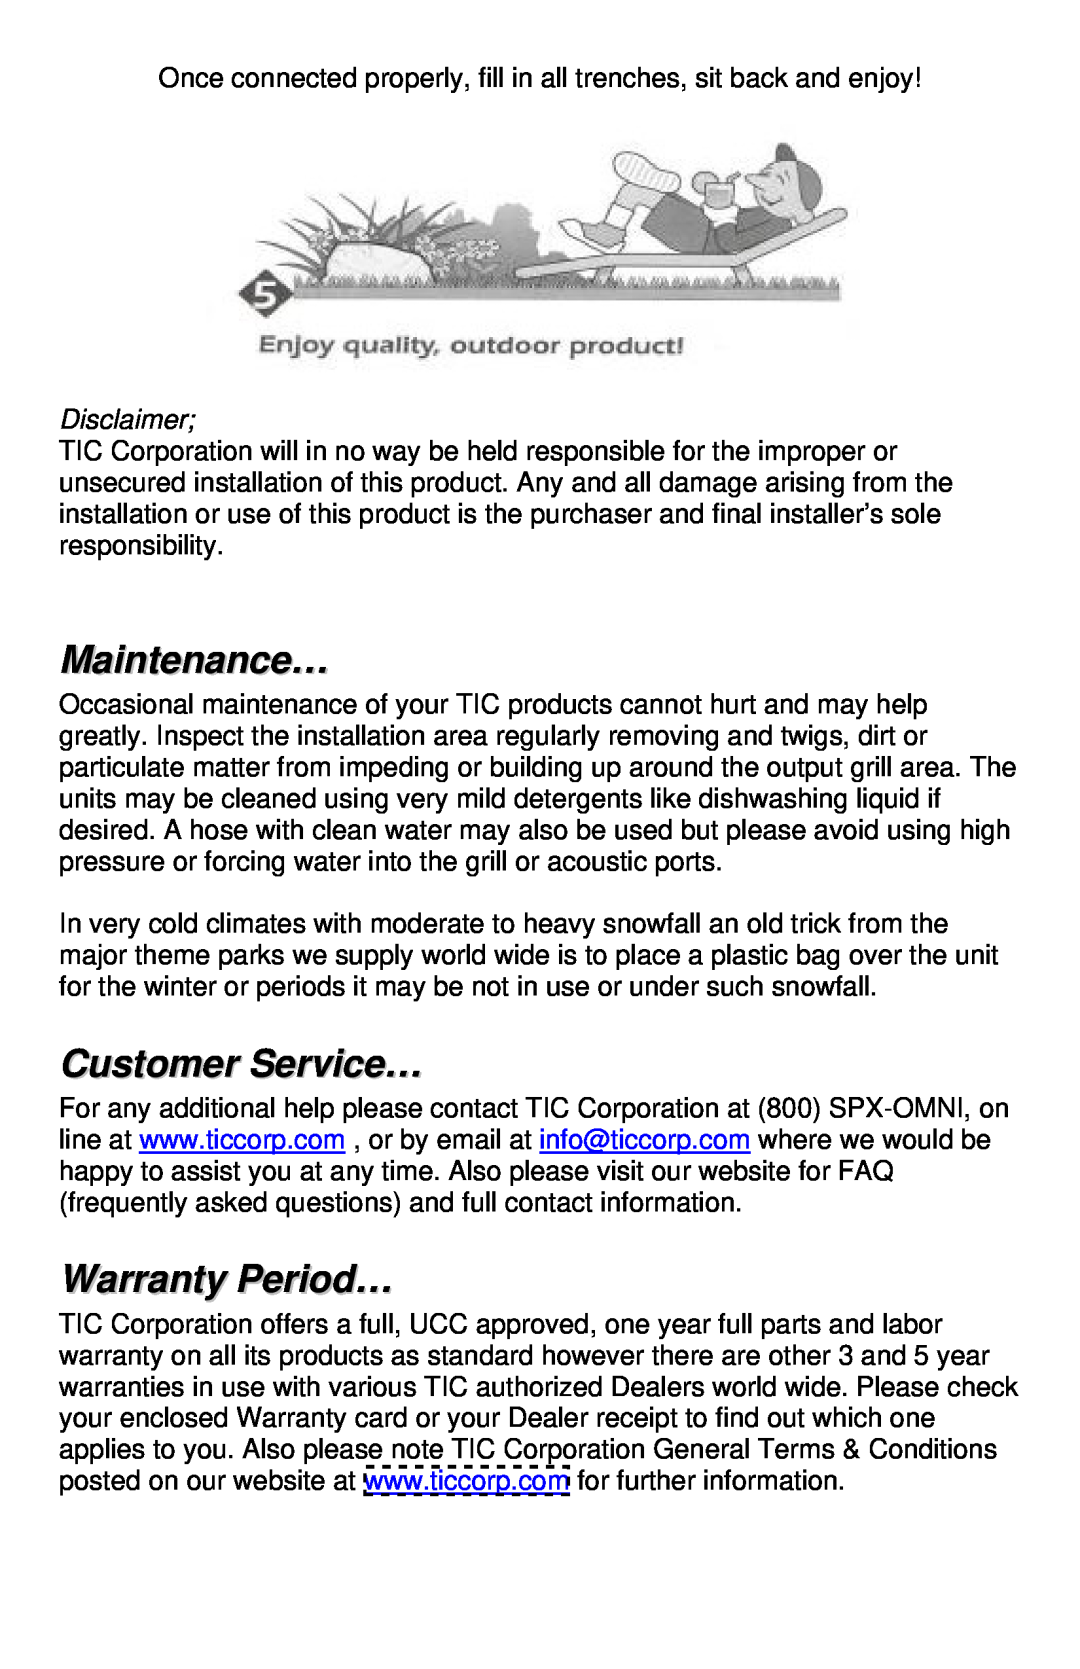 TIC TFS0, TFS5 manual Maintenance…, Customer Service…, Warranty Period…, Disclaimer 